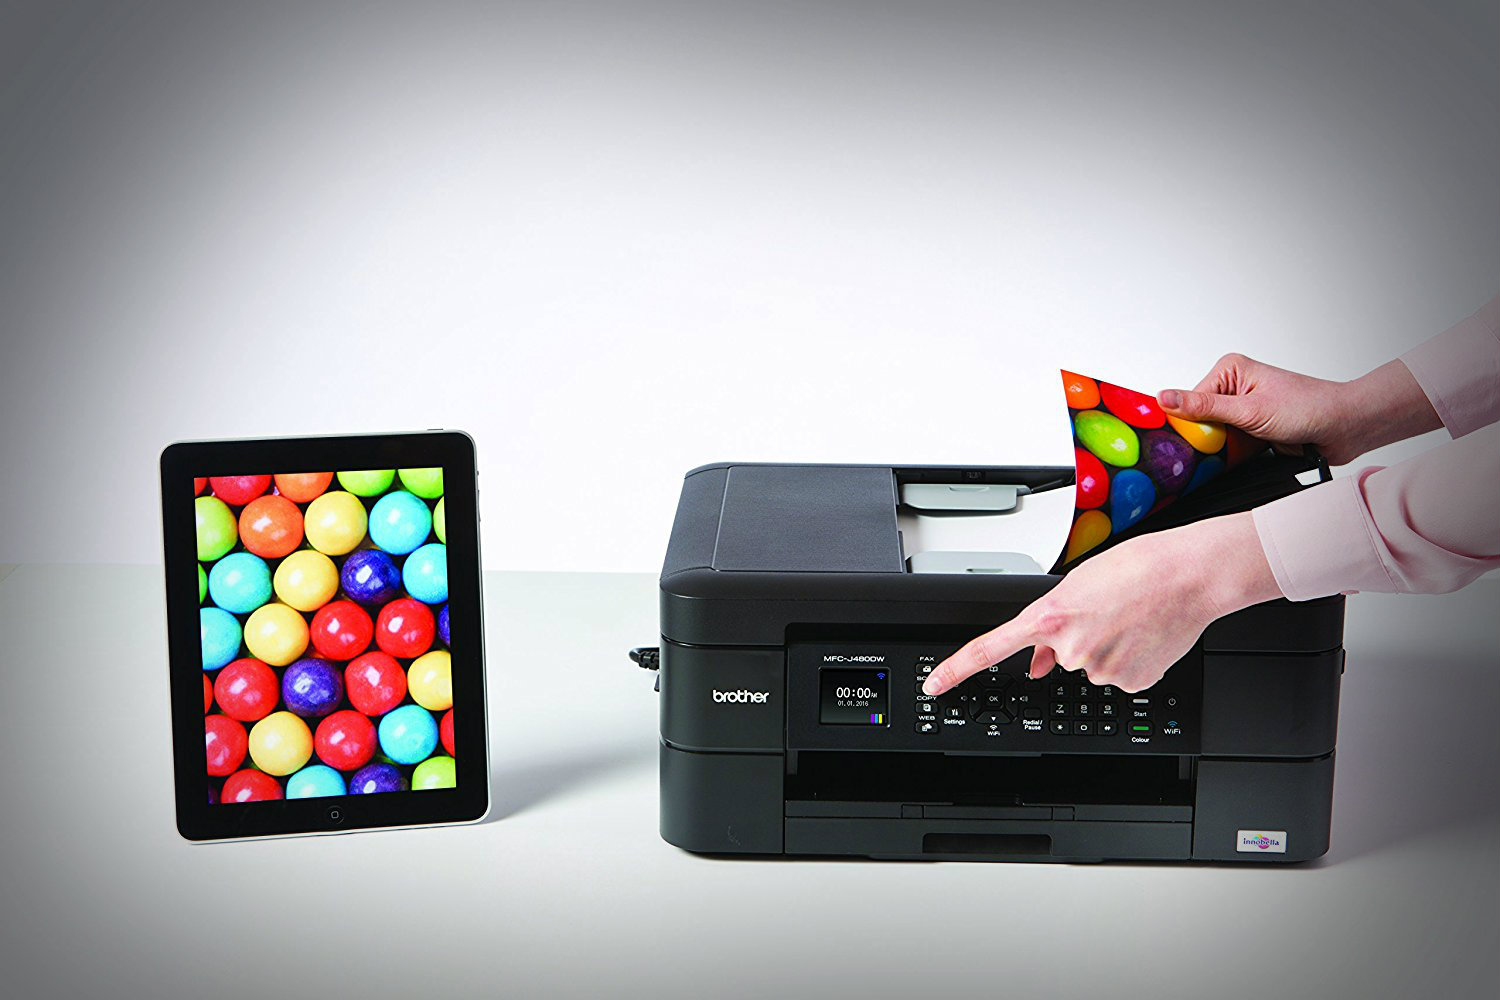 Inkjet Printer - Colour, Digital & Wireless